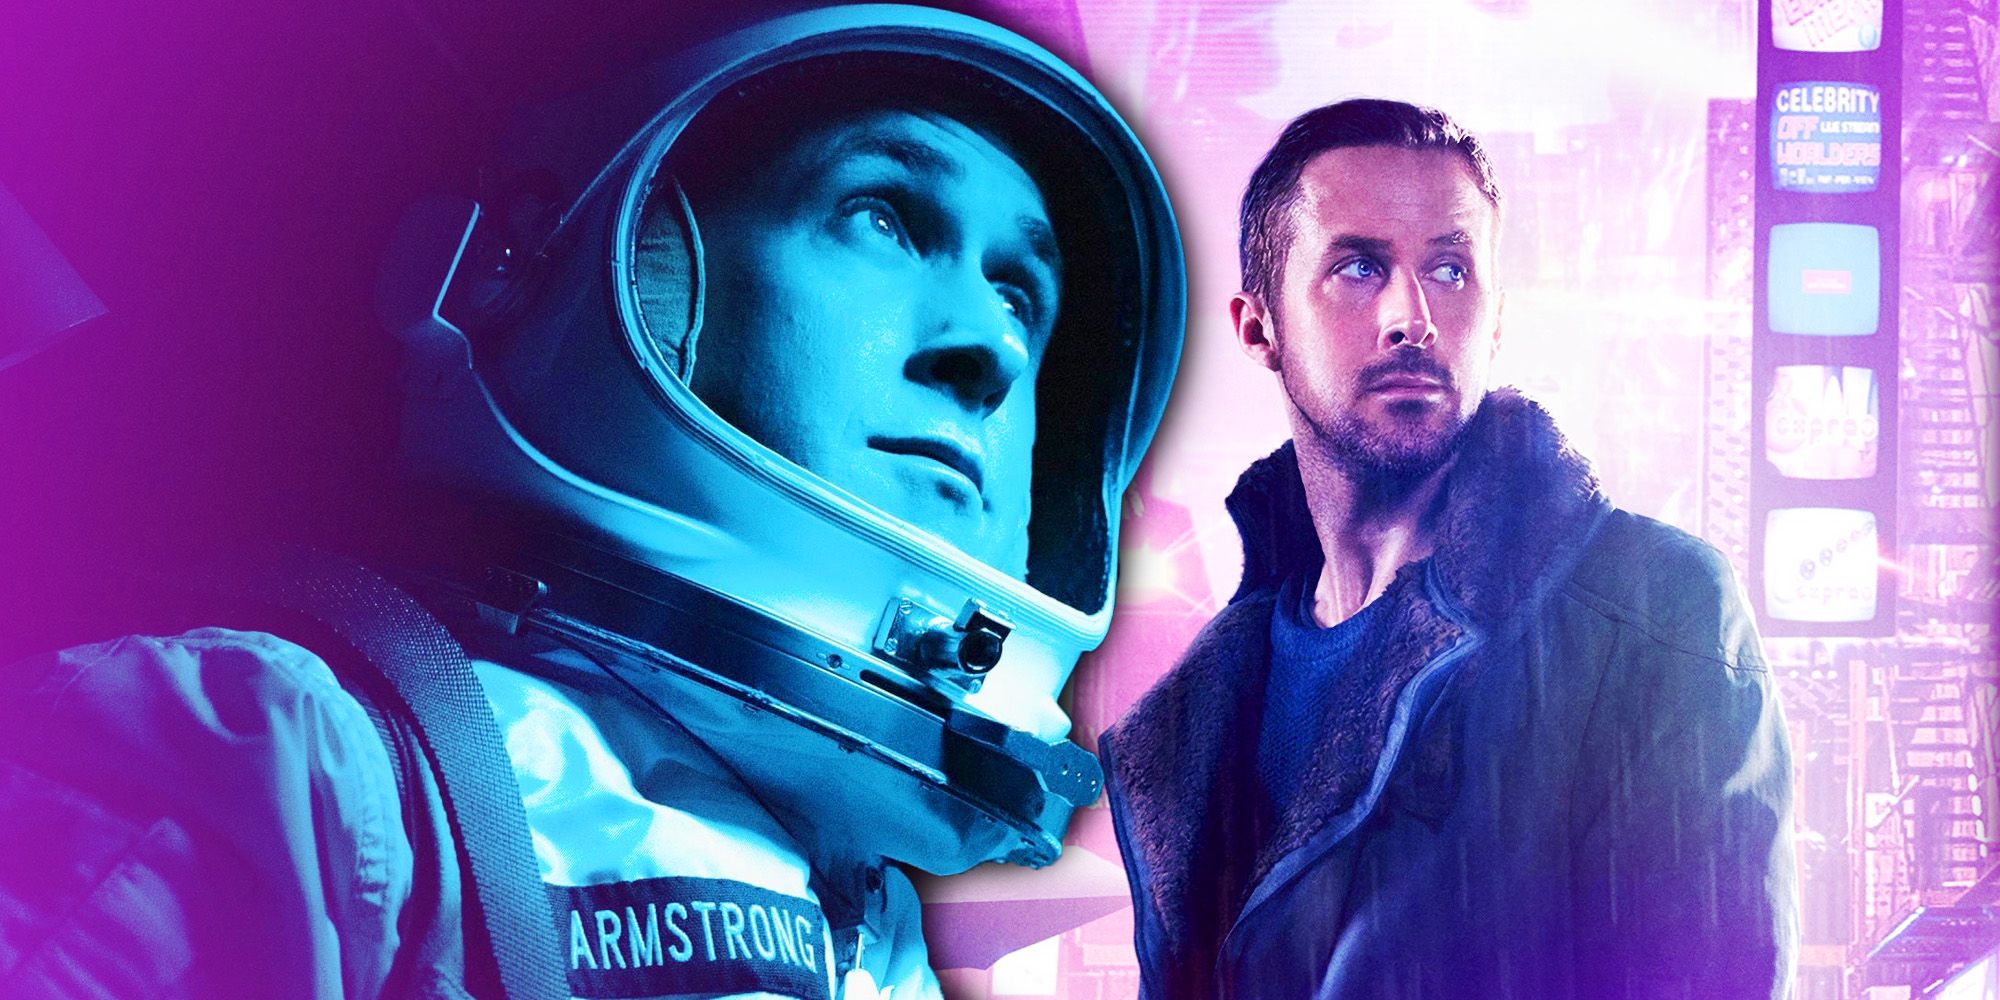 Ryan Gosling in Blade Runner 2049 and First Man